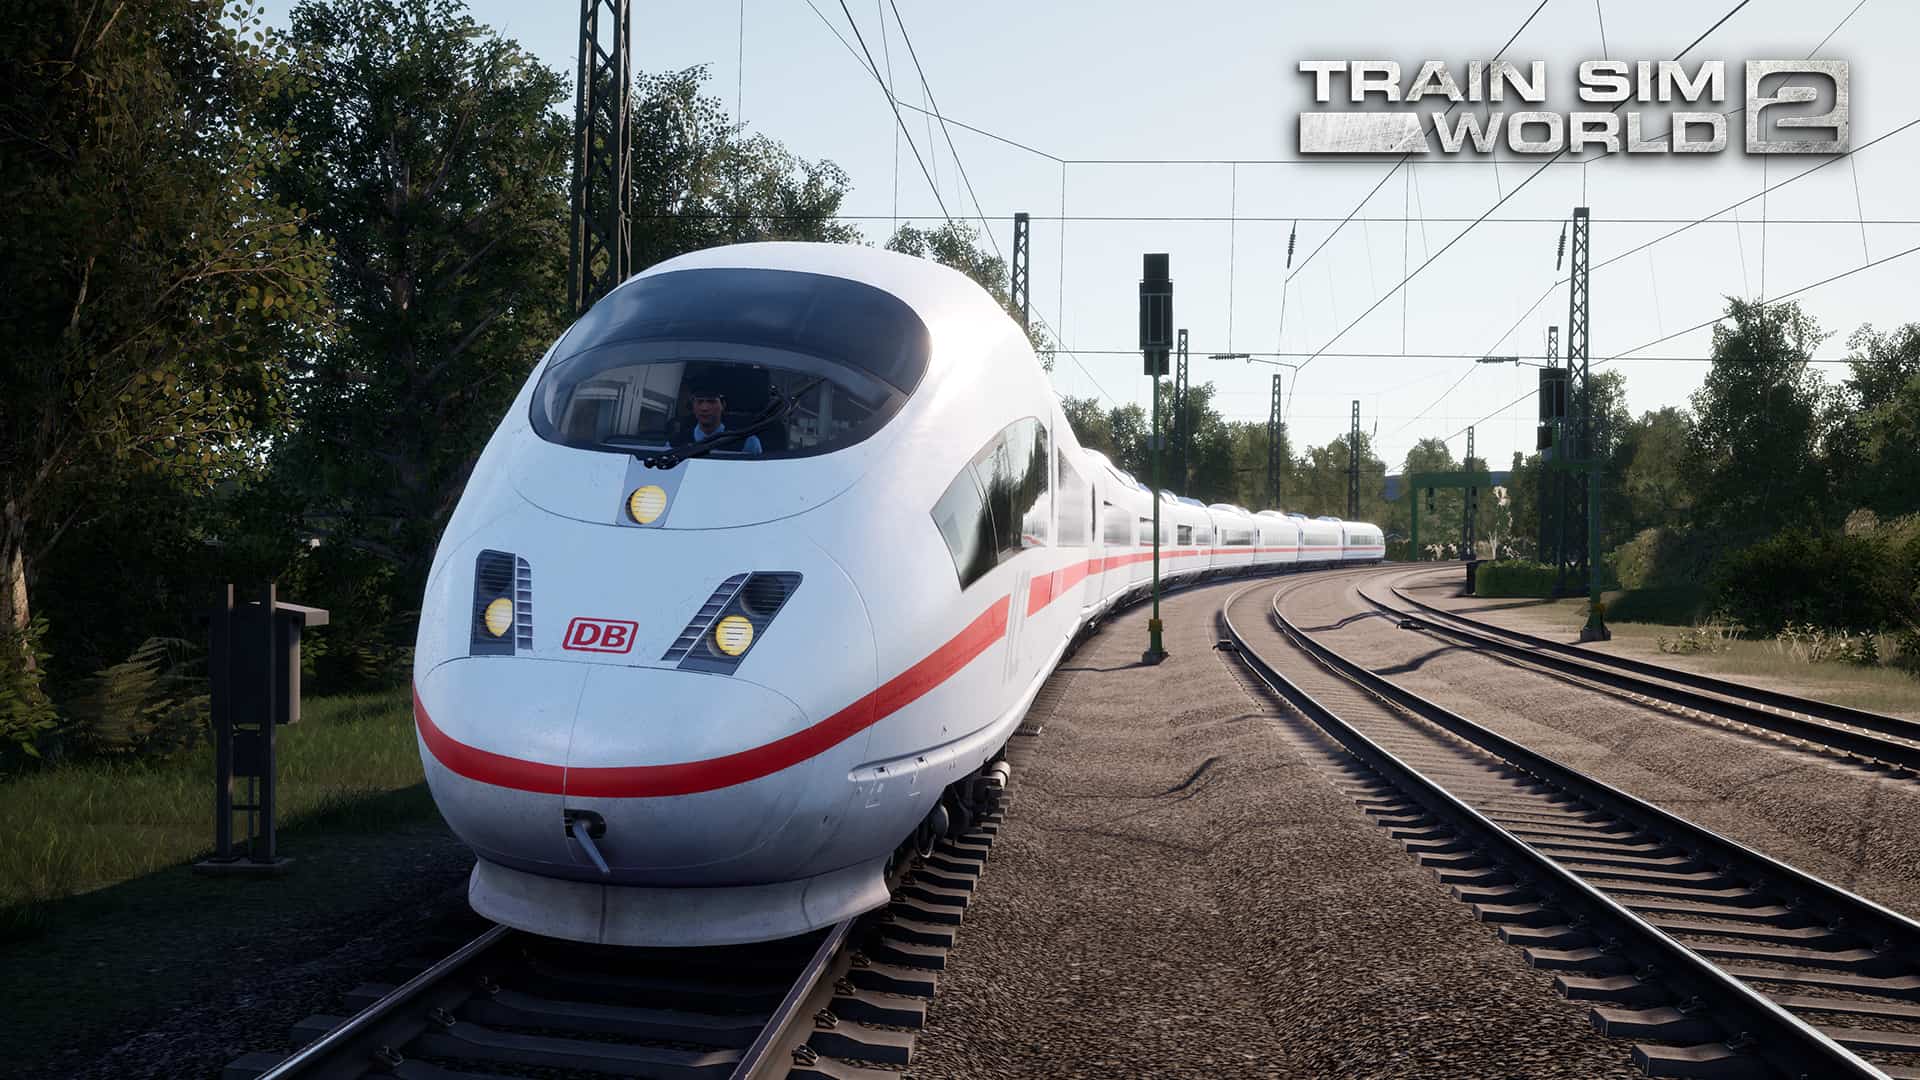 New Train Sim World 2 Wallpapers